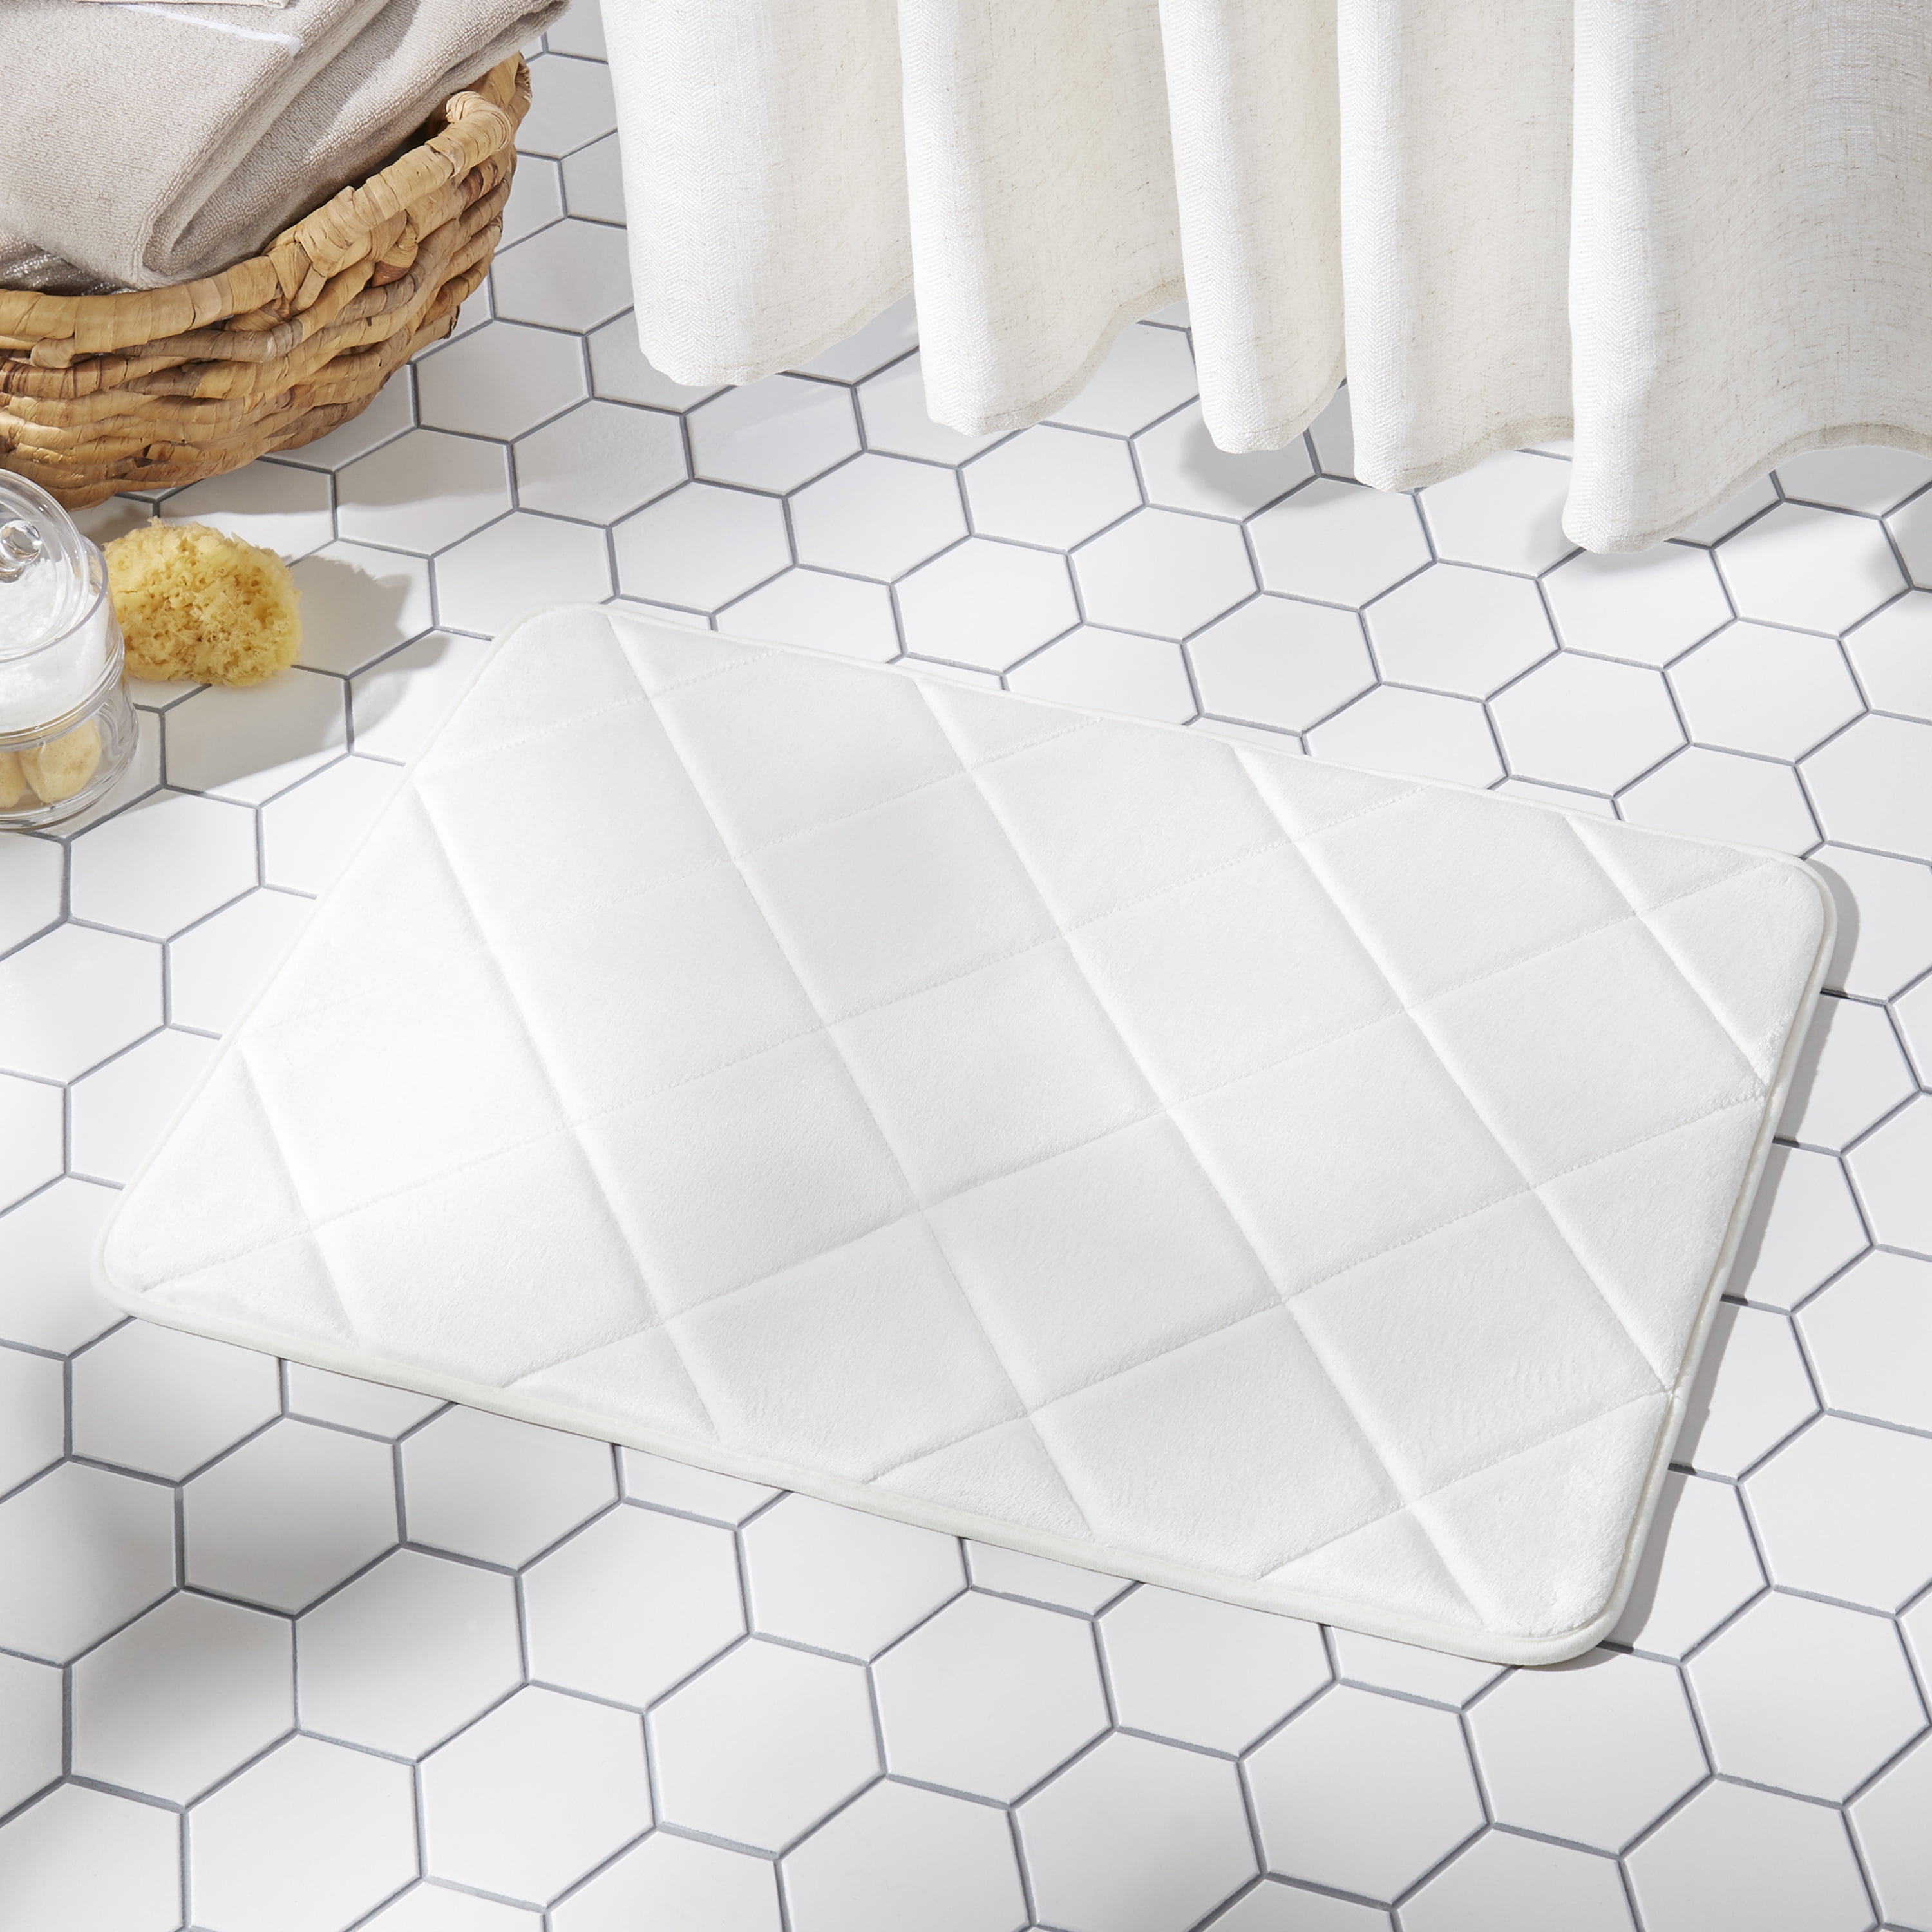 Marble Texture Memory Foam Bath Rugs Non Slip Absorbent Cozy Soft Flannel Bathroom mats 36 x 24